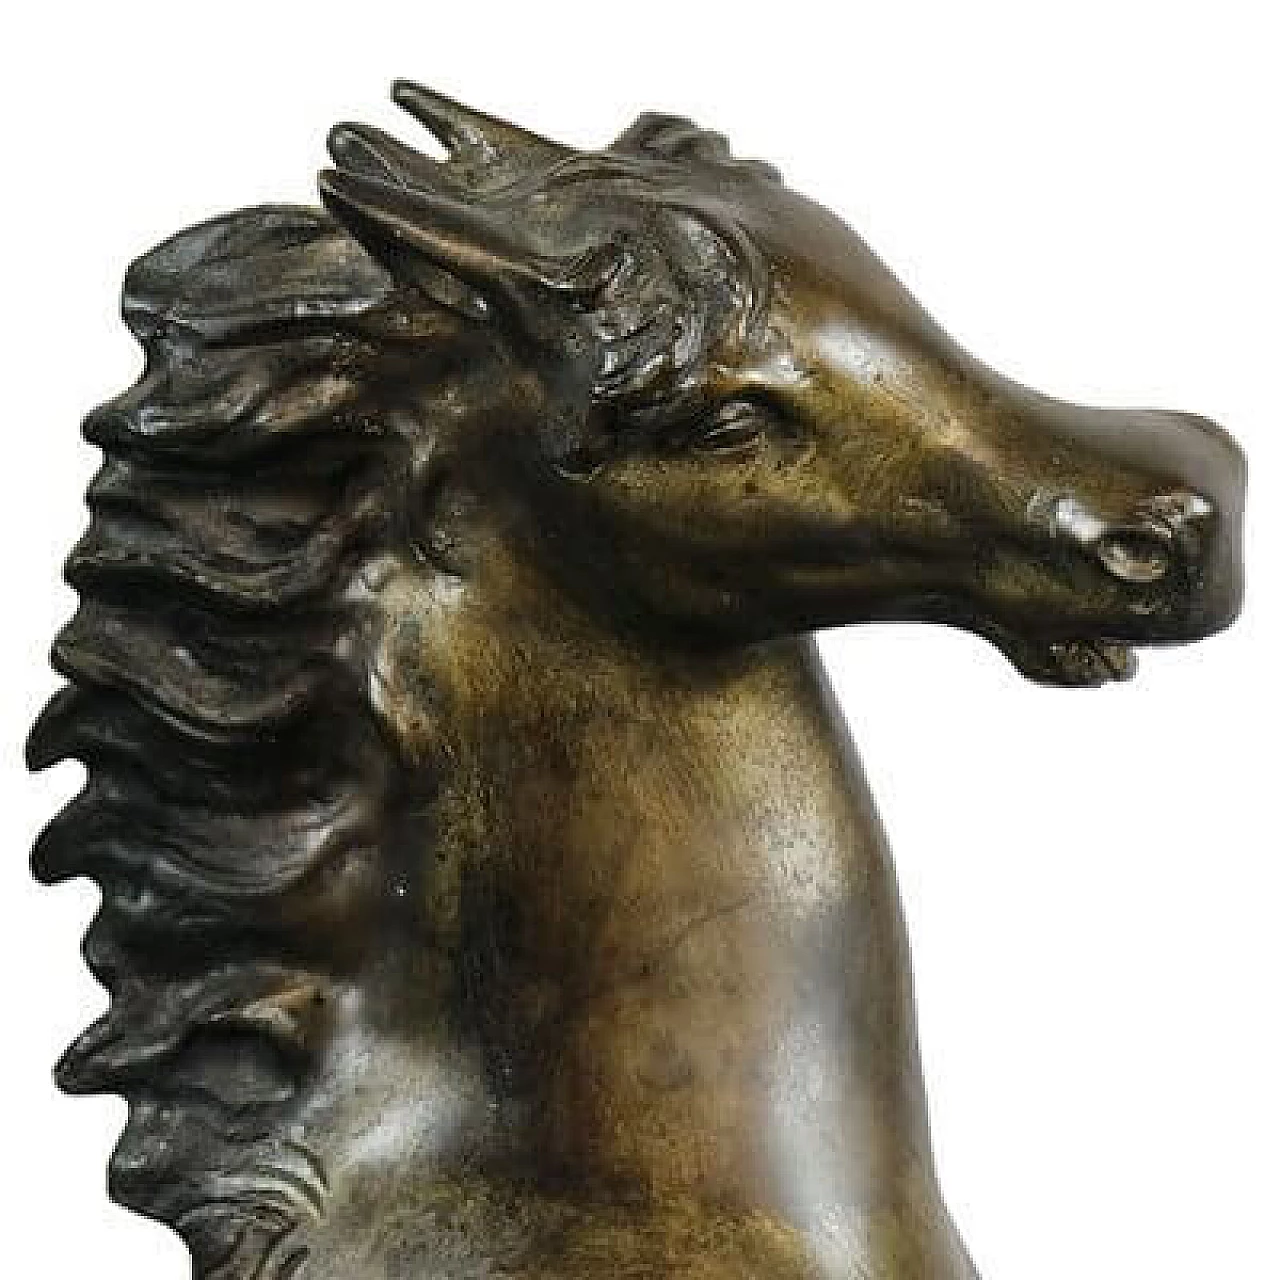 Indian warrior on horseback, reproduction after Tommaso Campajola, bronze sculpture 11